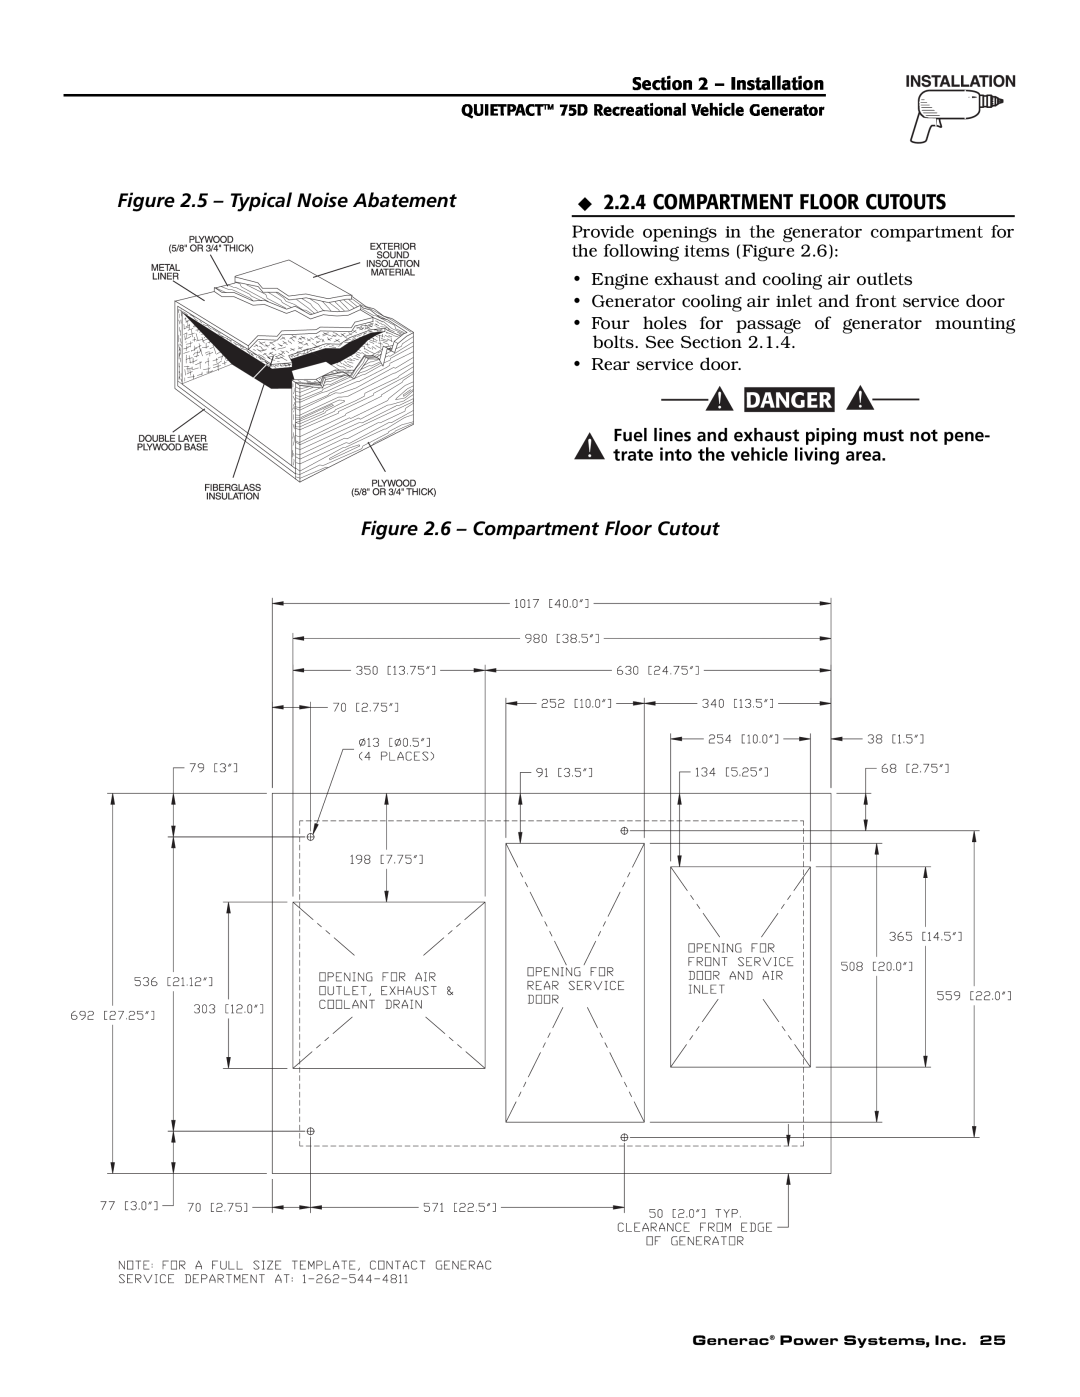 Guardian Technologies 004270-2 5 - Typical Noise Abatement 2.2.4 COMPARTMENT FLOOR CUTOUTS, 6 - Compartment Floor Cutout 